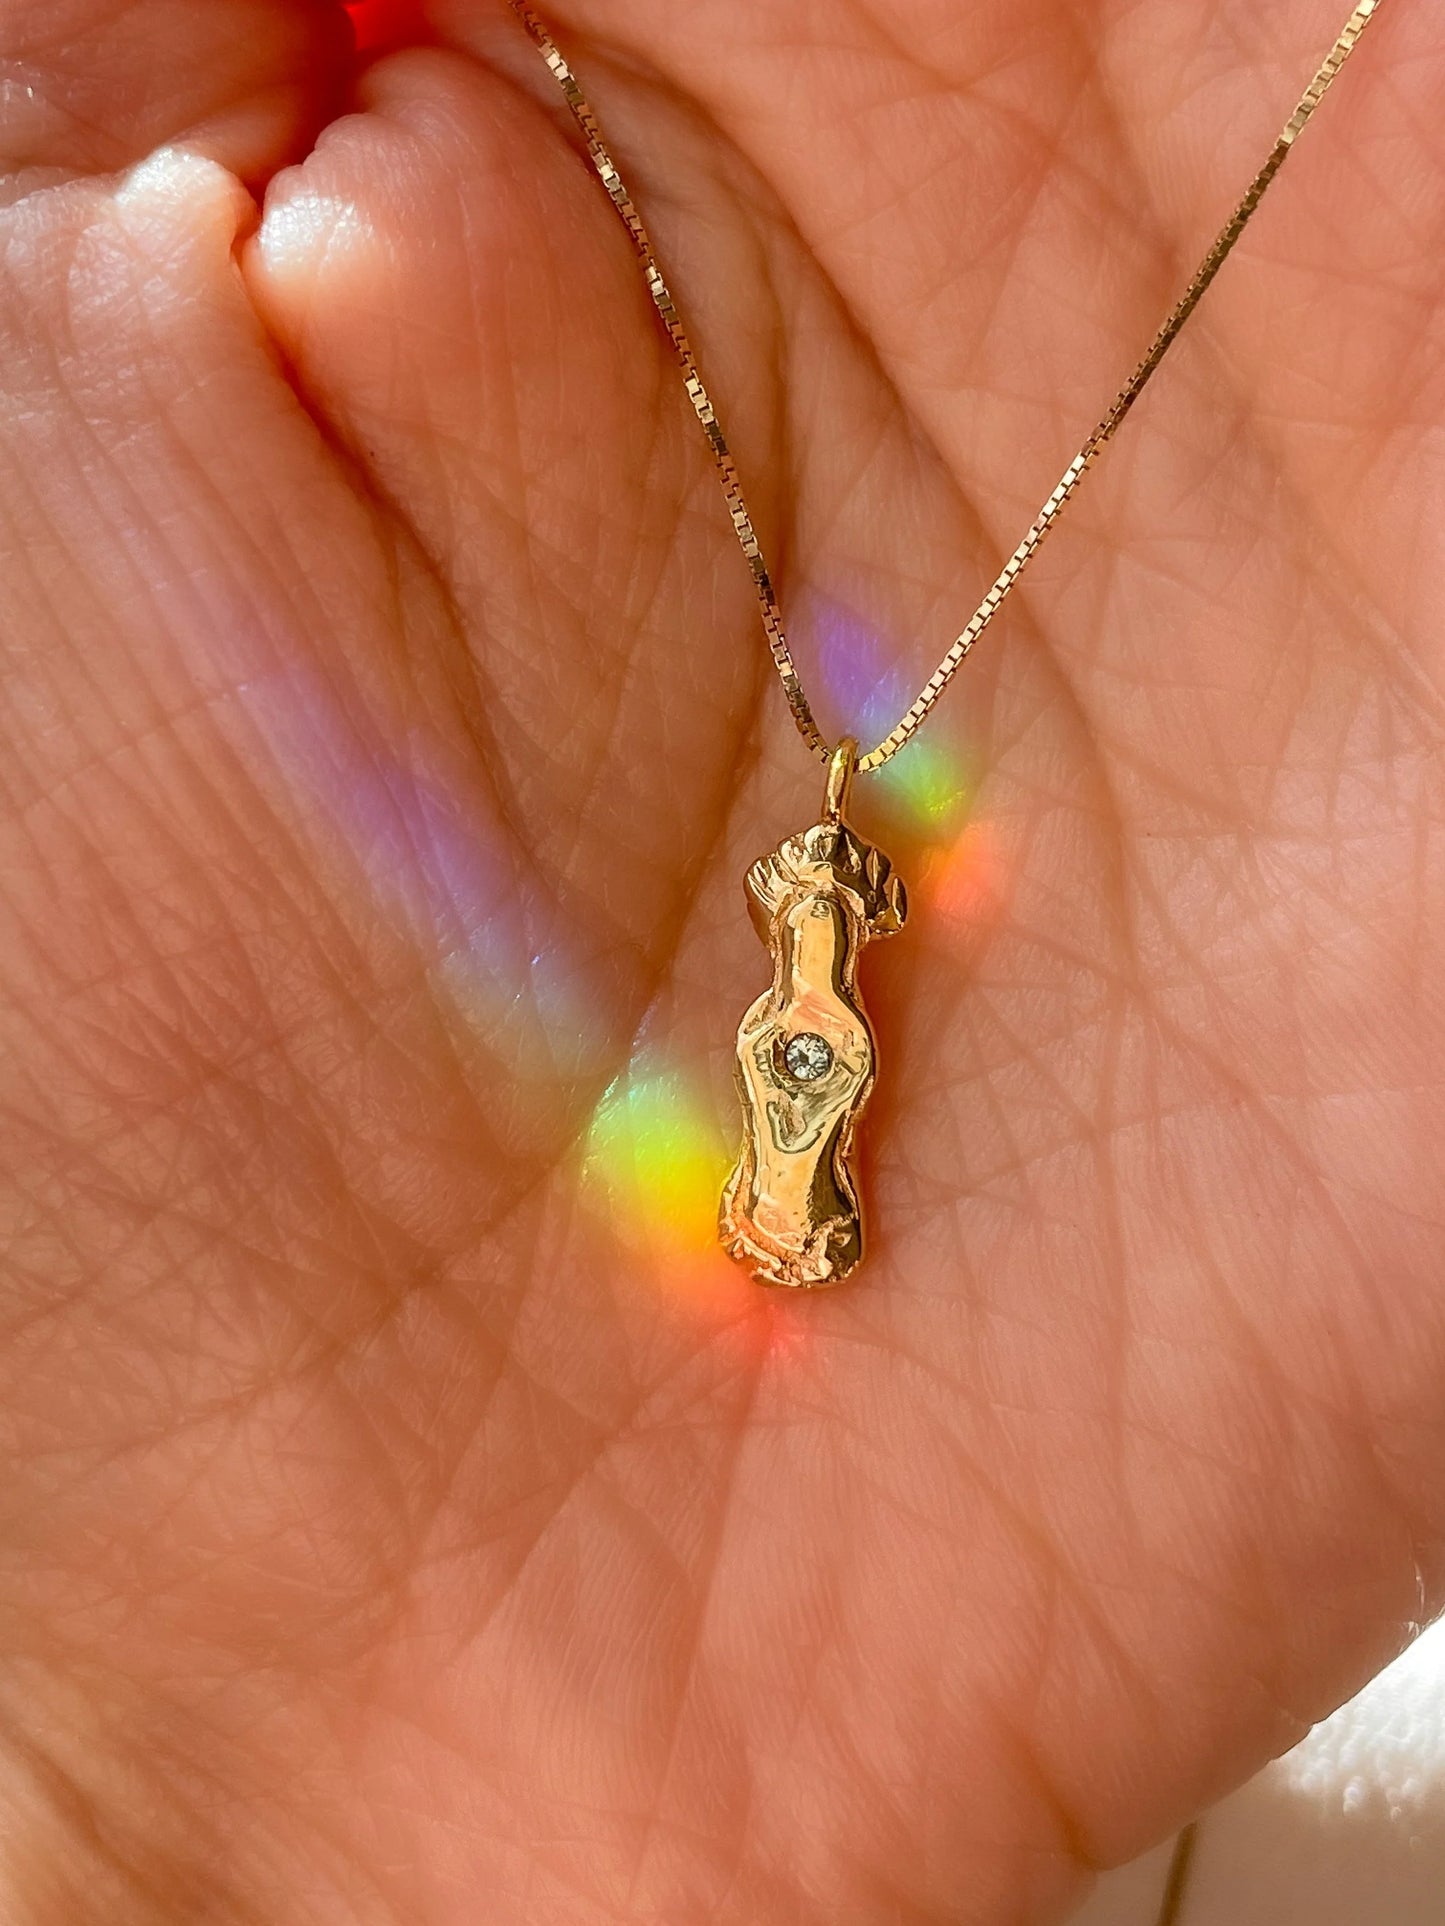 spirit guide pendant necklace - pink sapphire